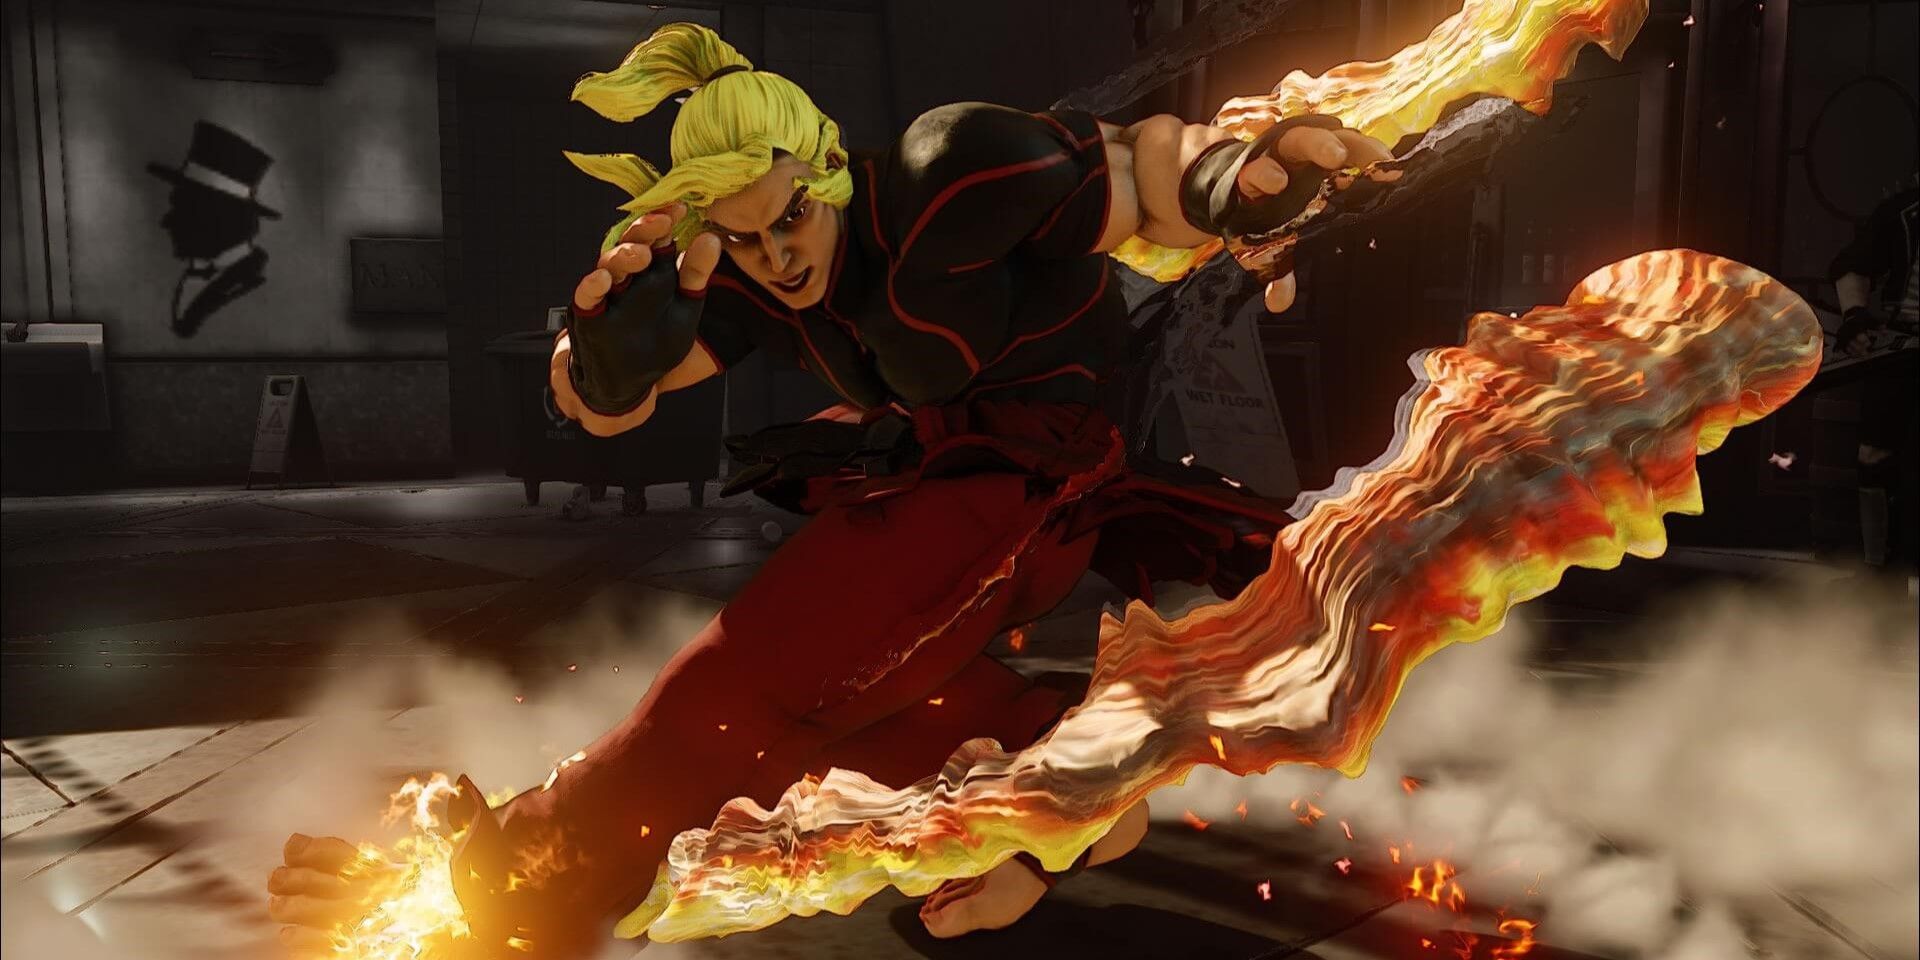 Ken Street Fighter Series cross kick with flames